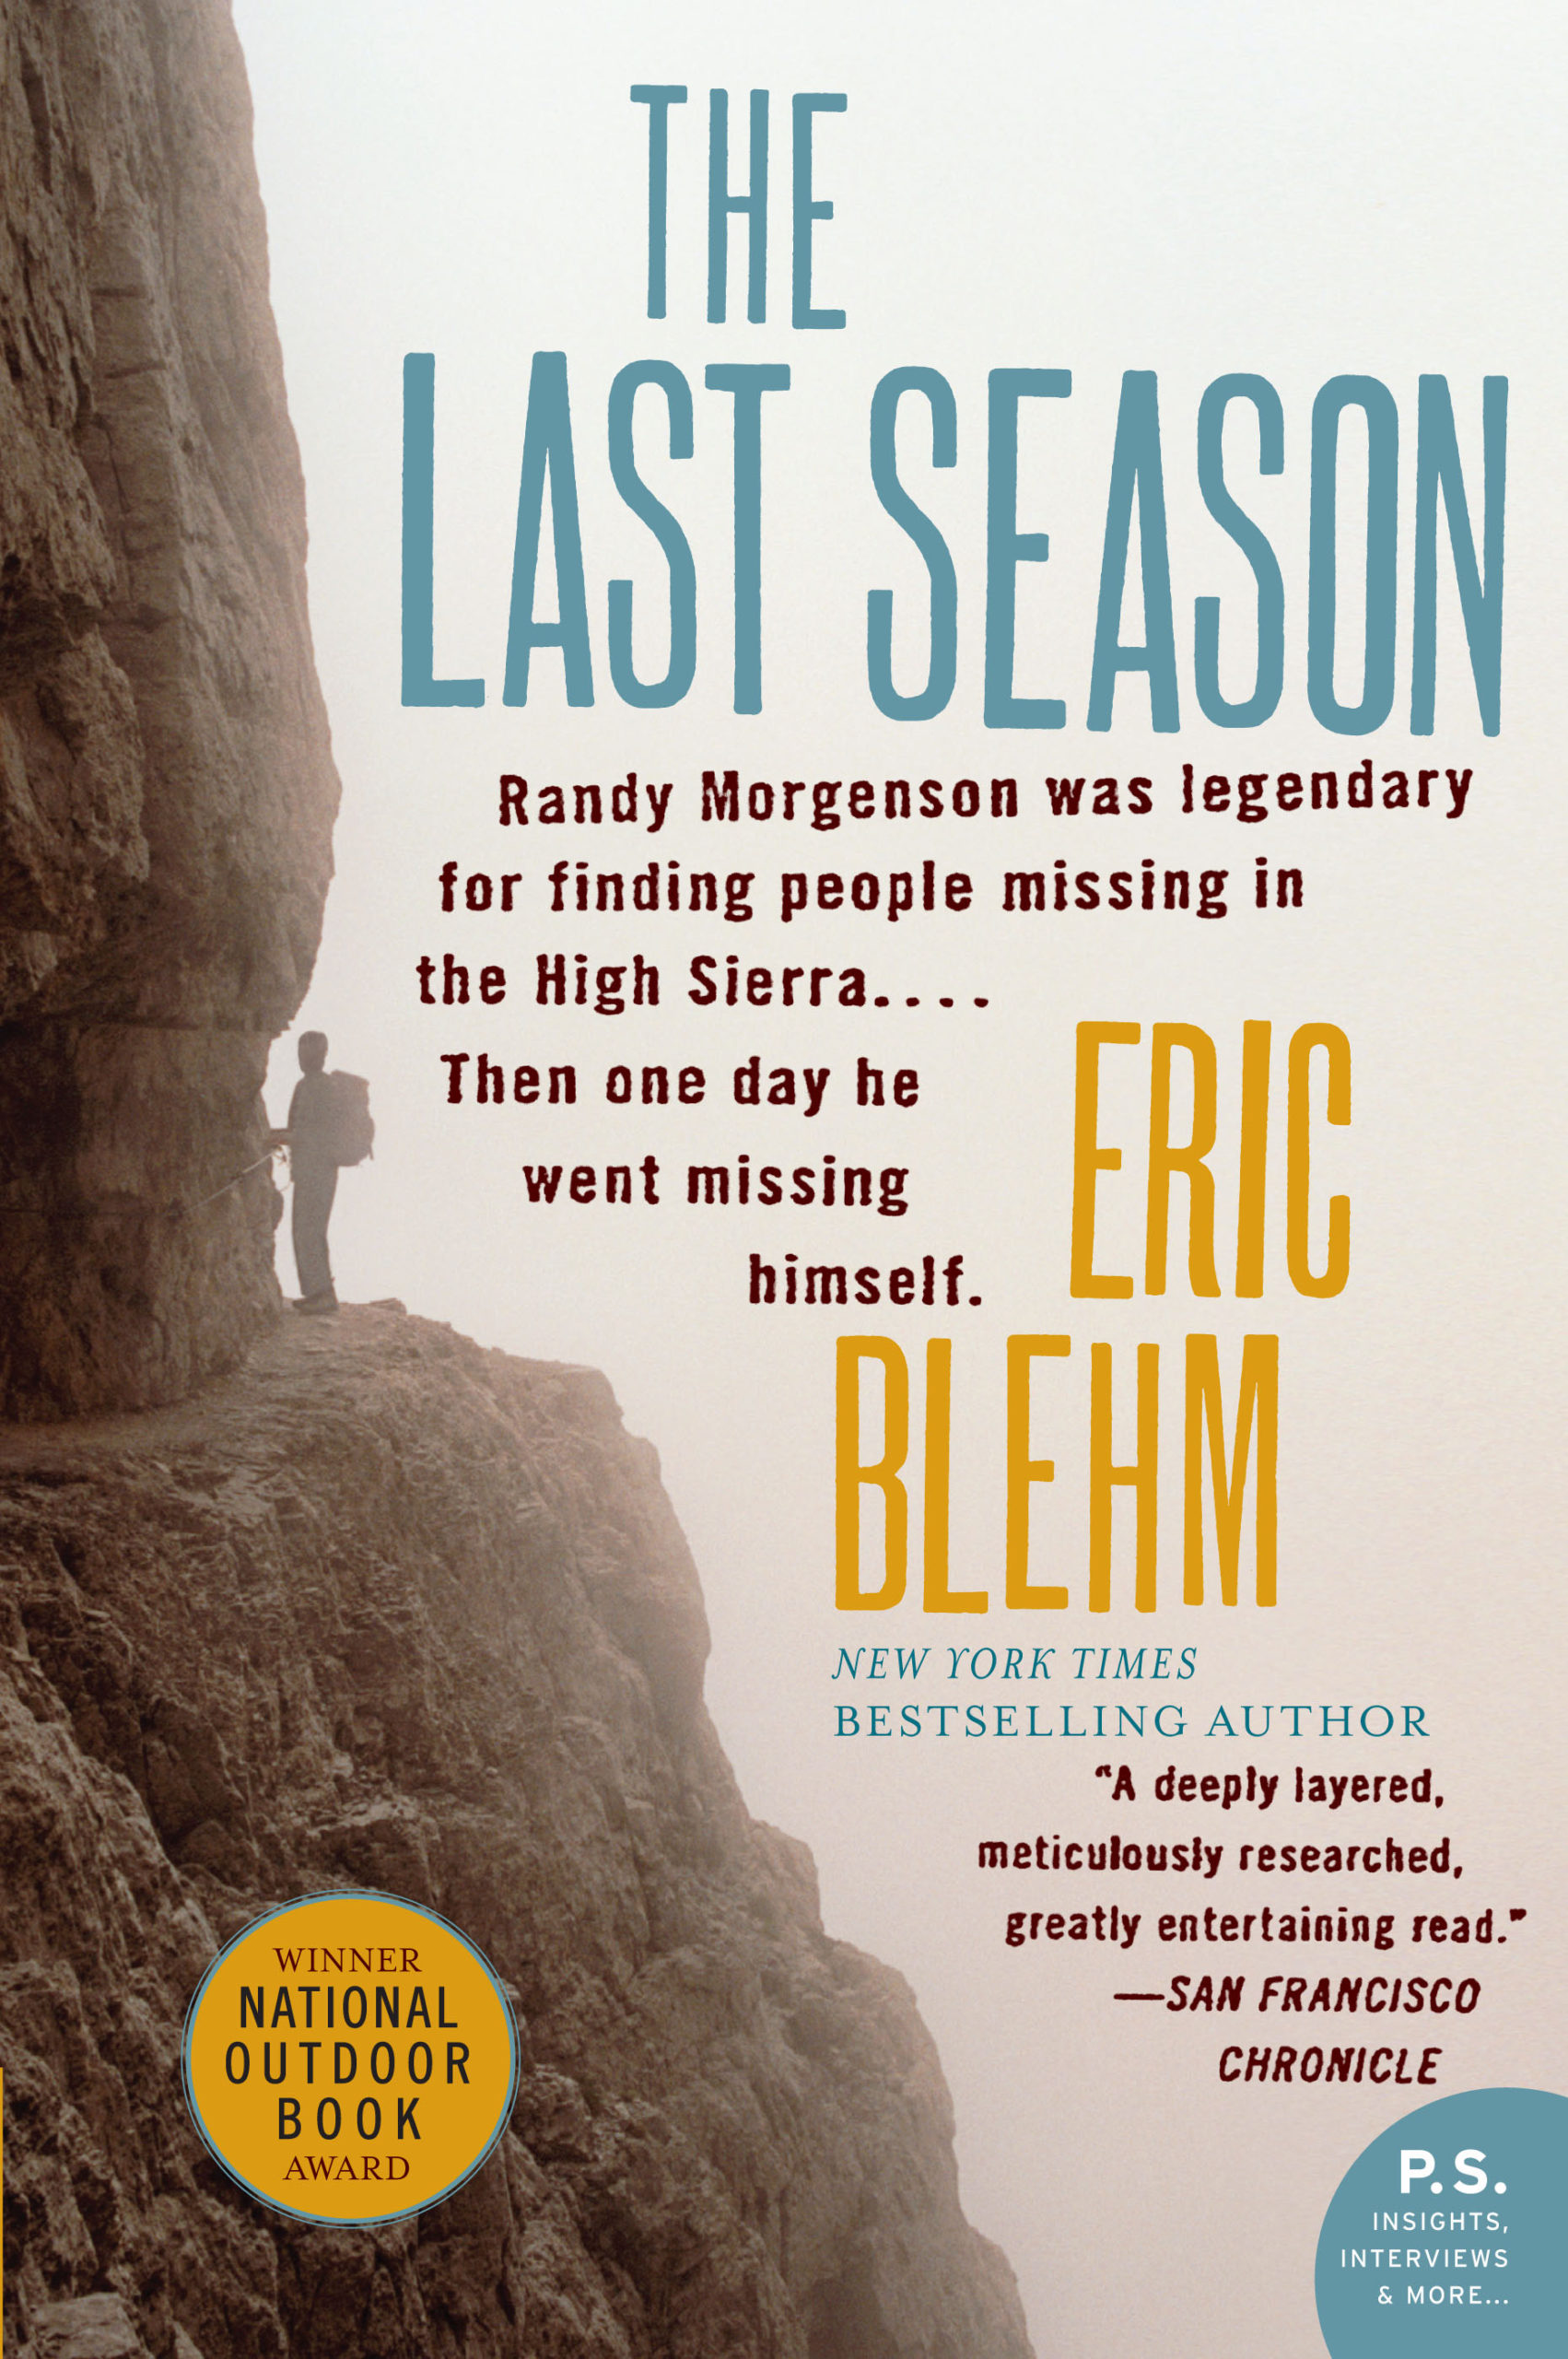 The Last Season by Eric Blechm